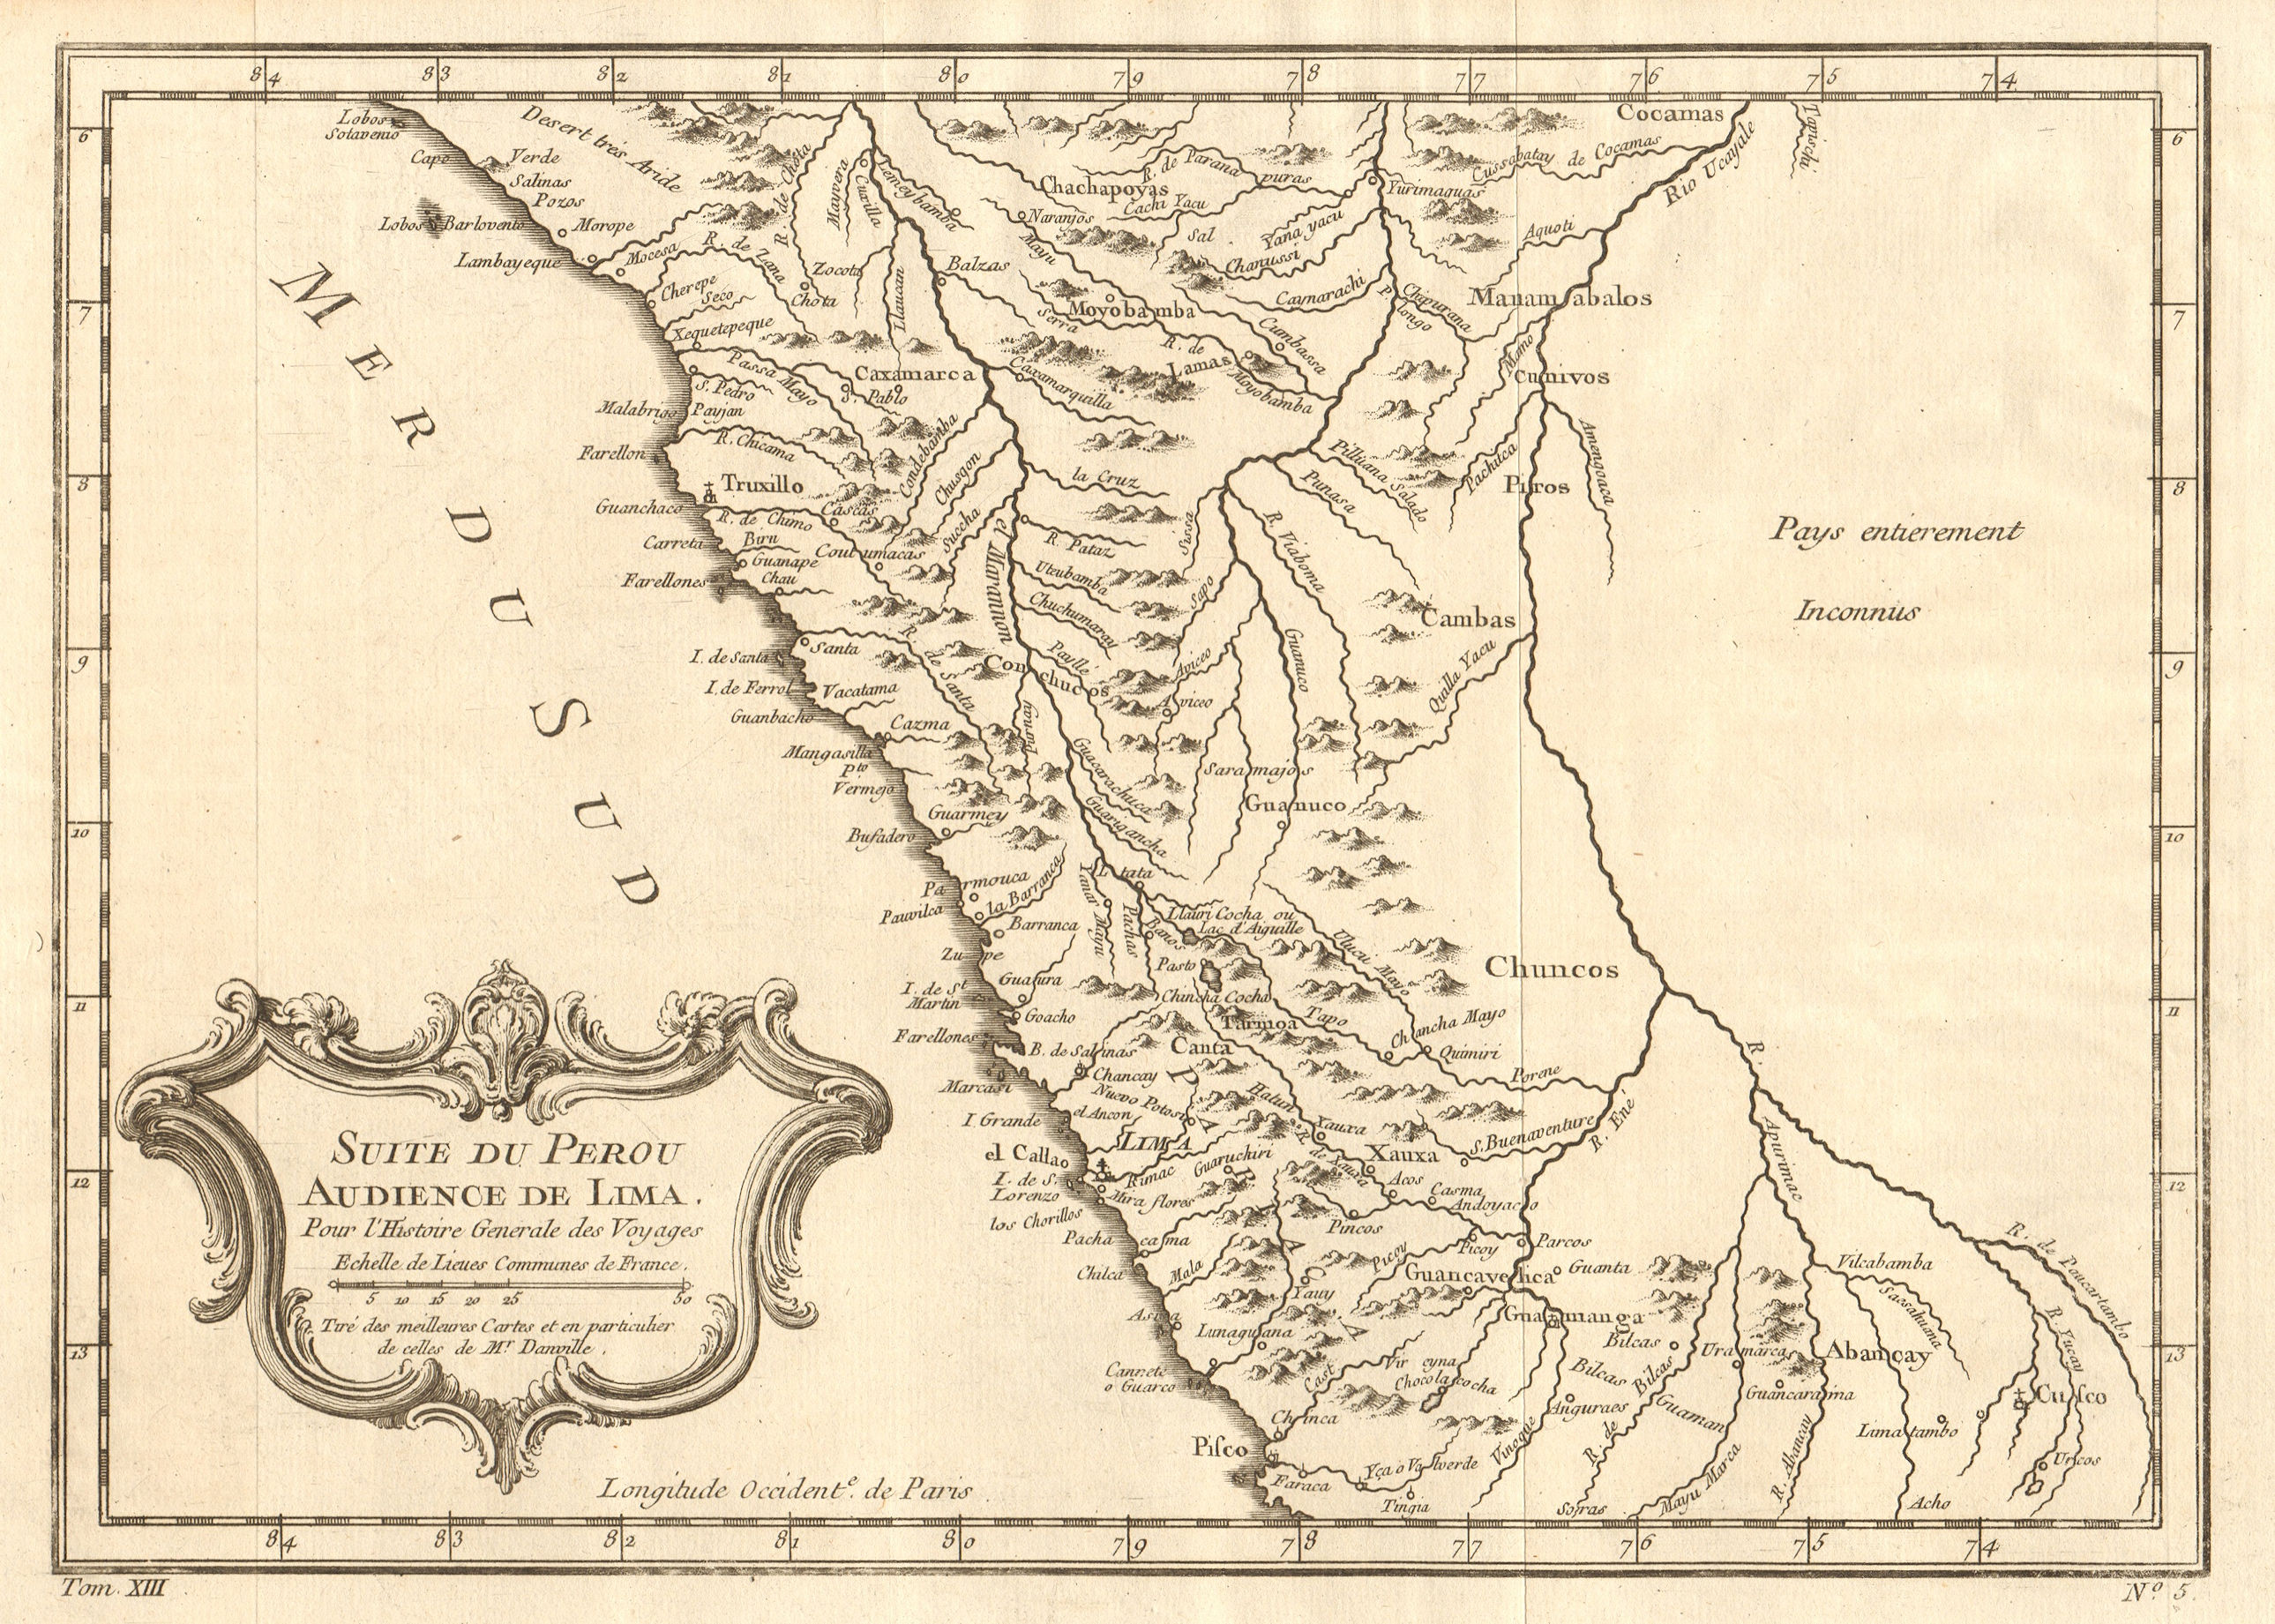 'Suite du Perou. Audience de Lima'. Northern Peru Pisco-Chiclayo BELLIN 1756 map